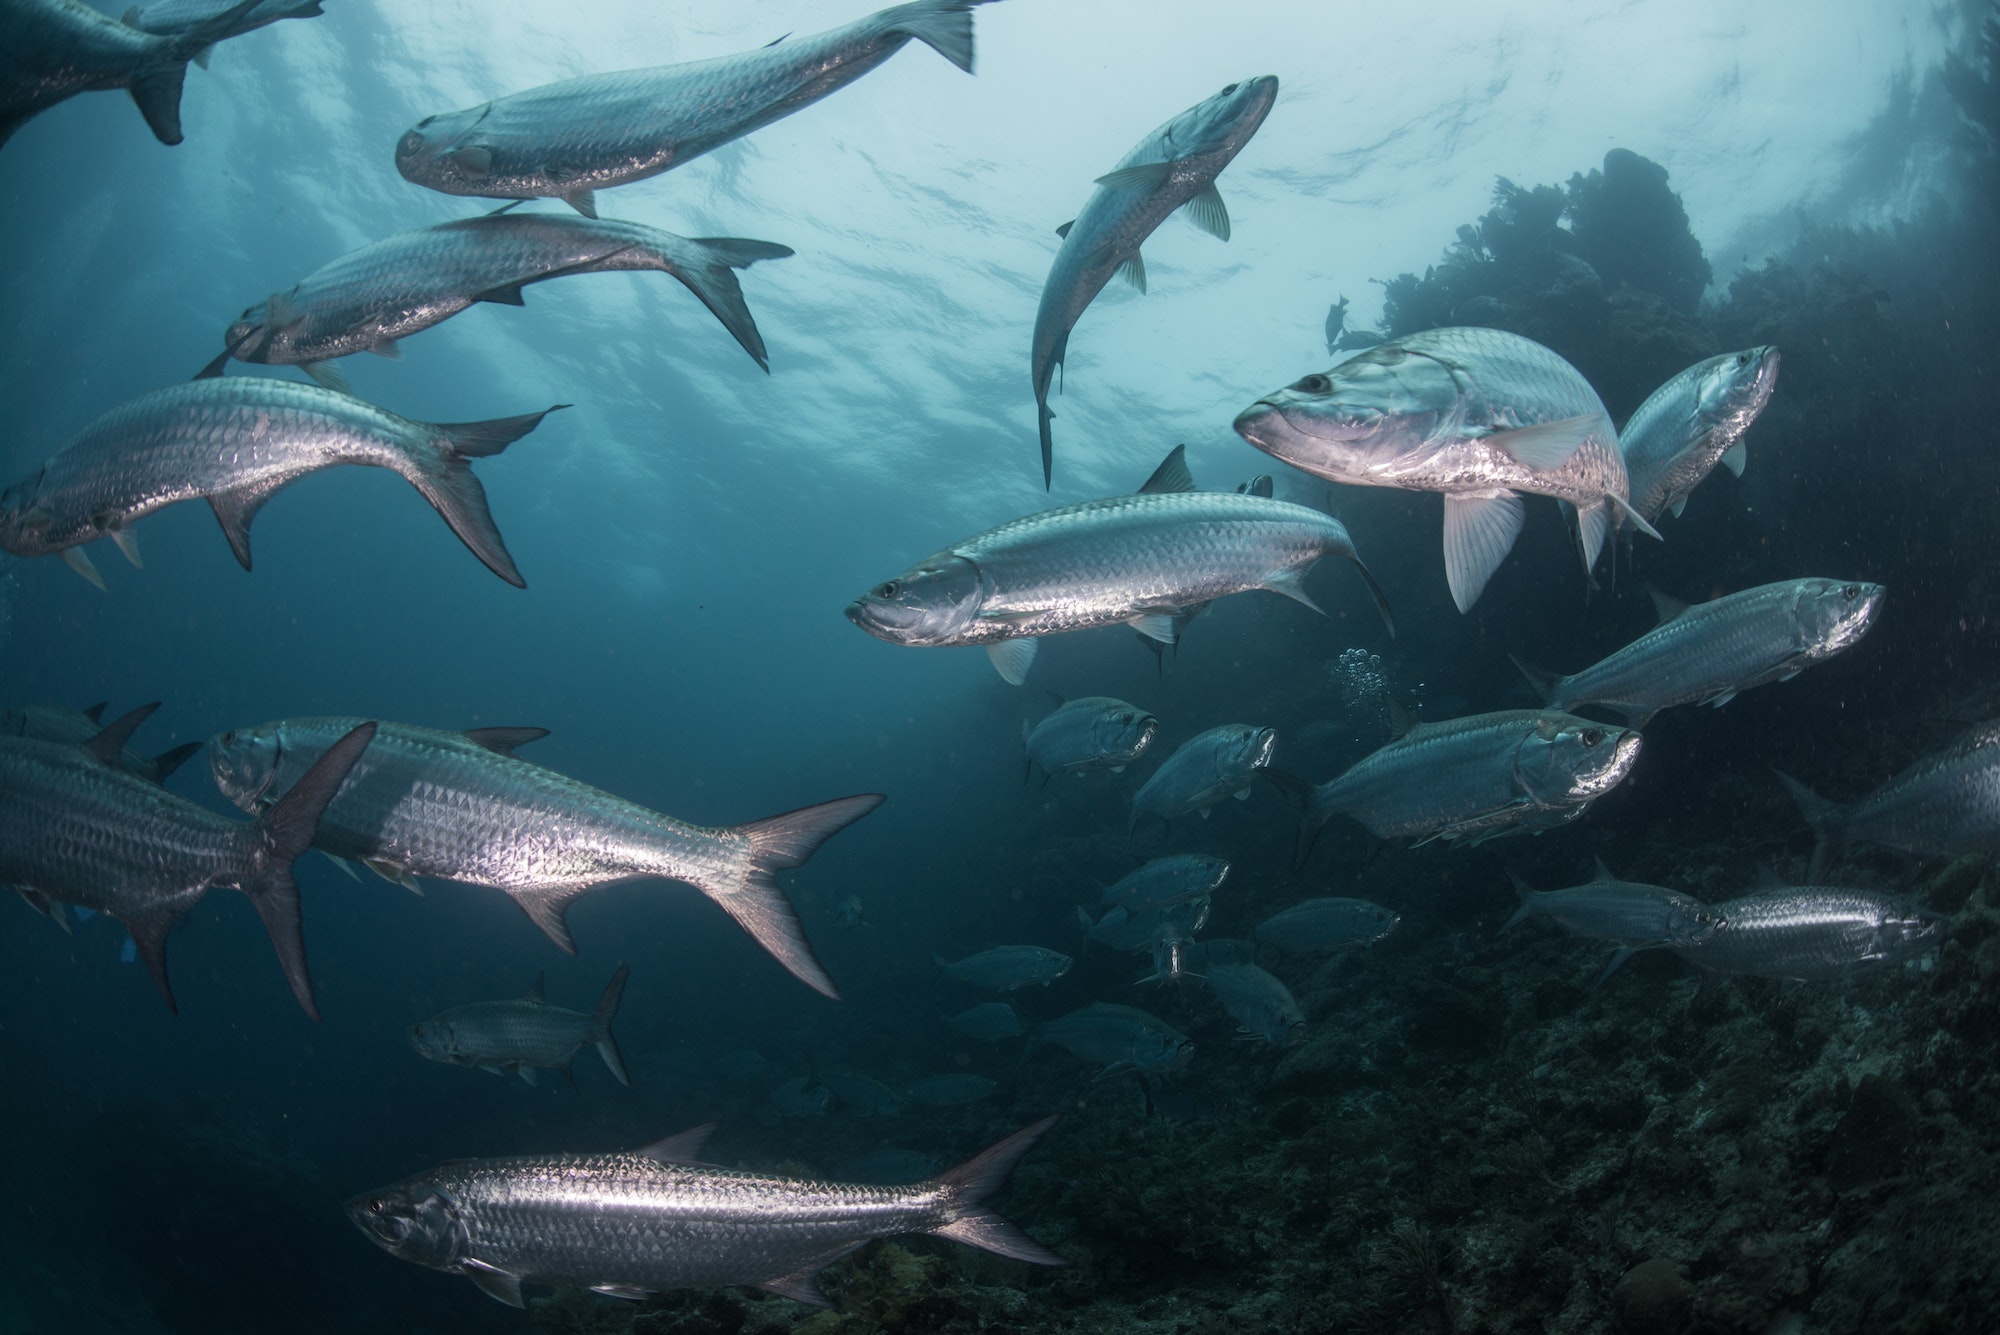 School of tarpon fish at reef, Xcalak, Quintana Roo, Mexico, North America